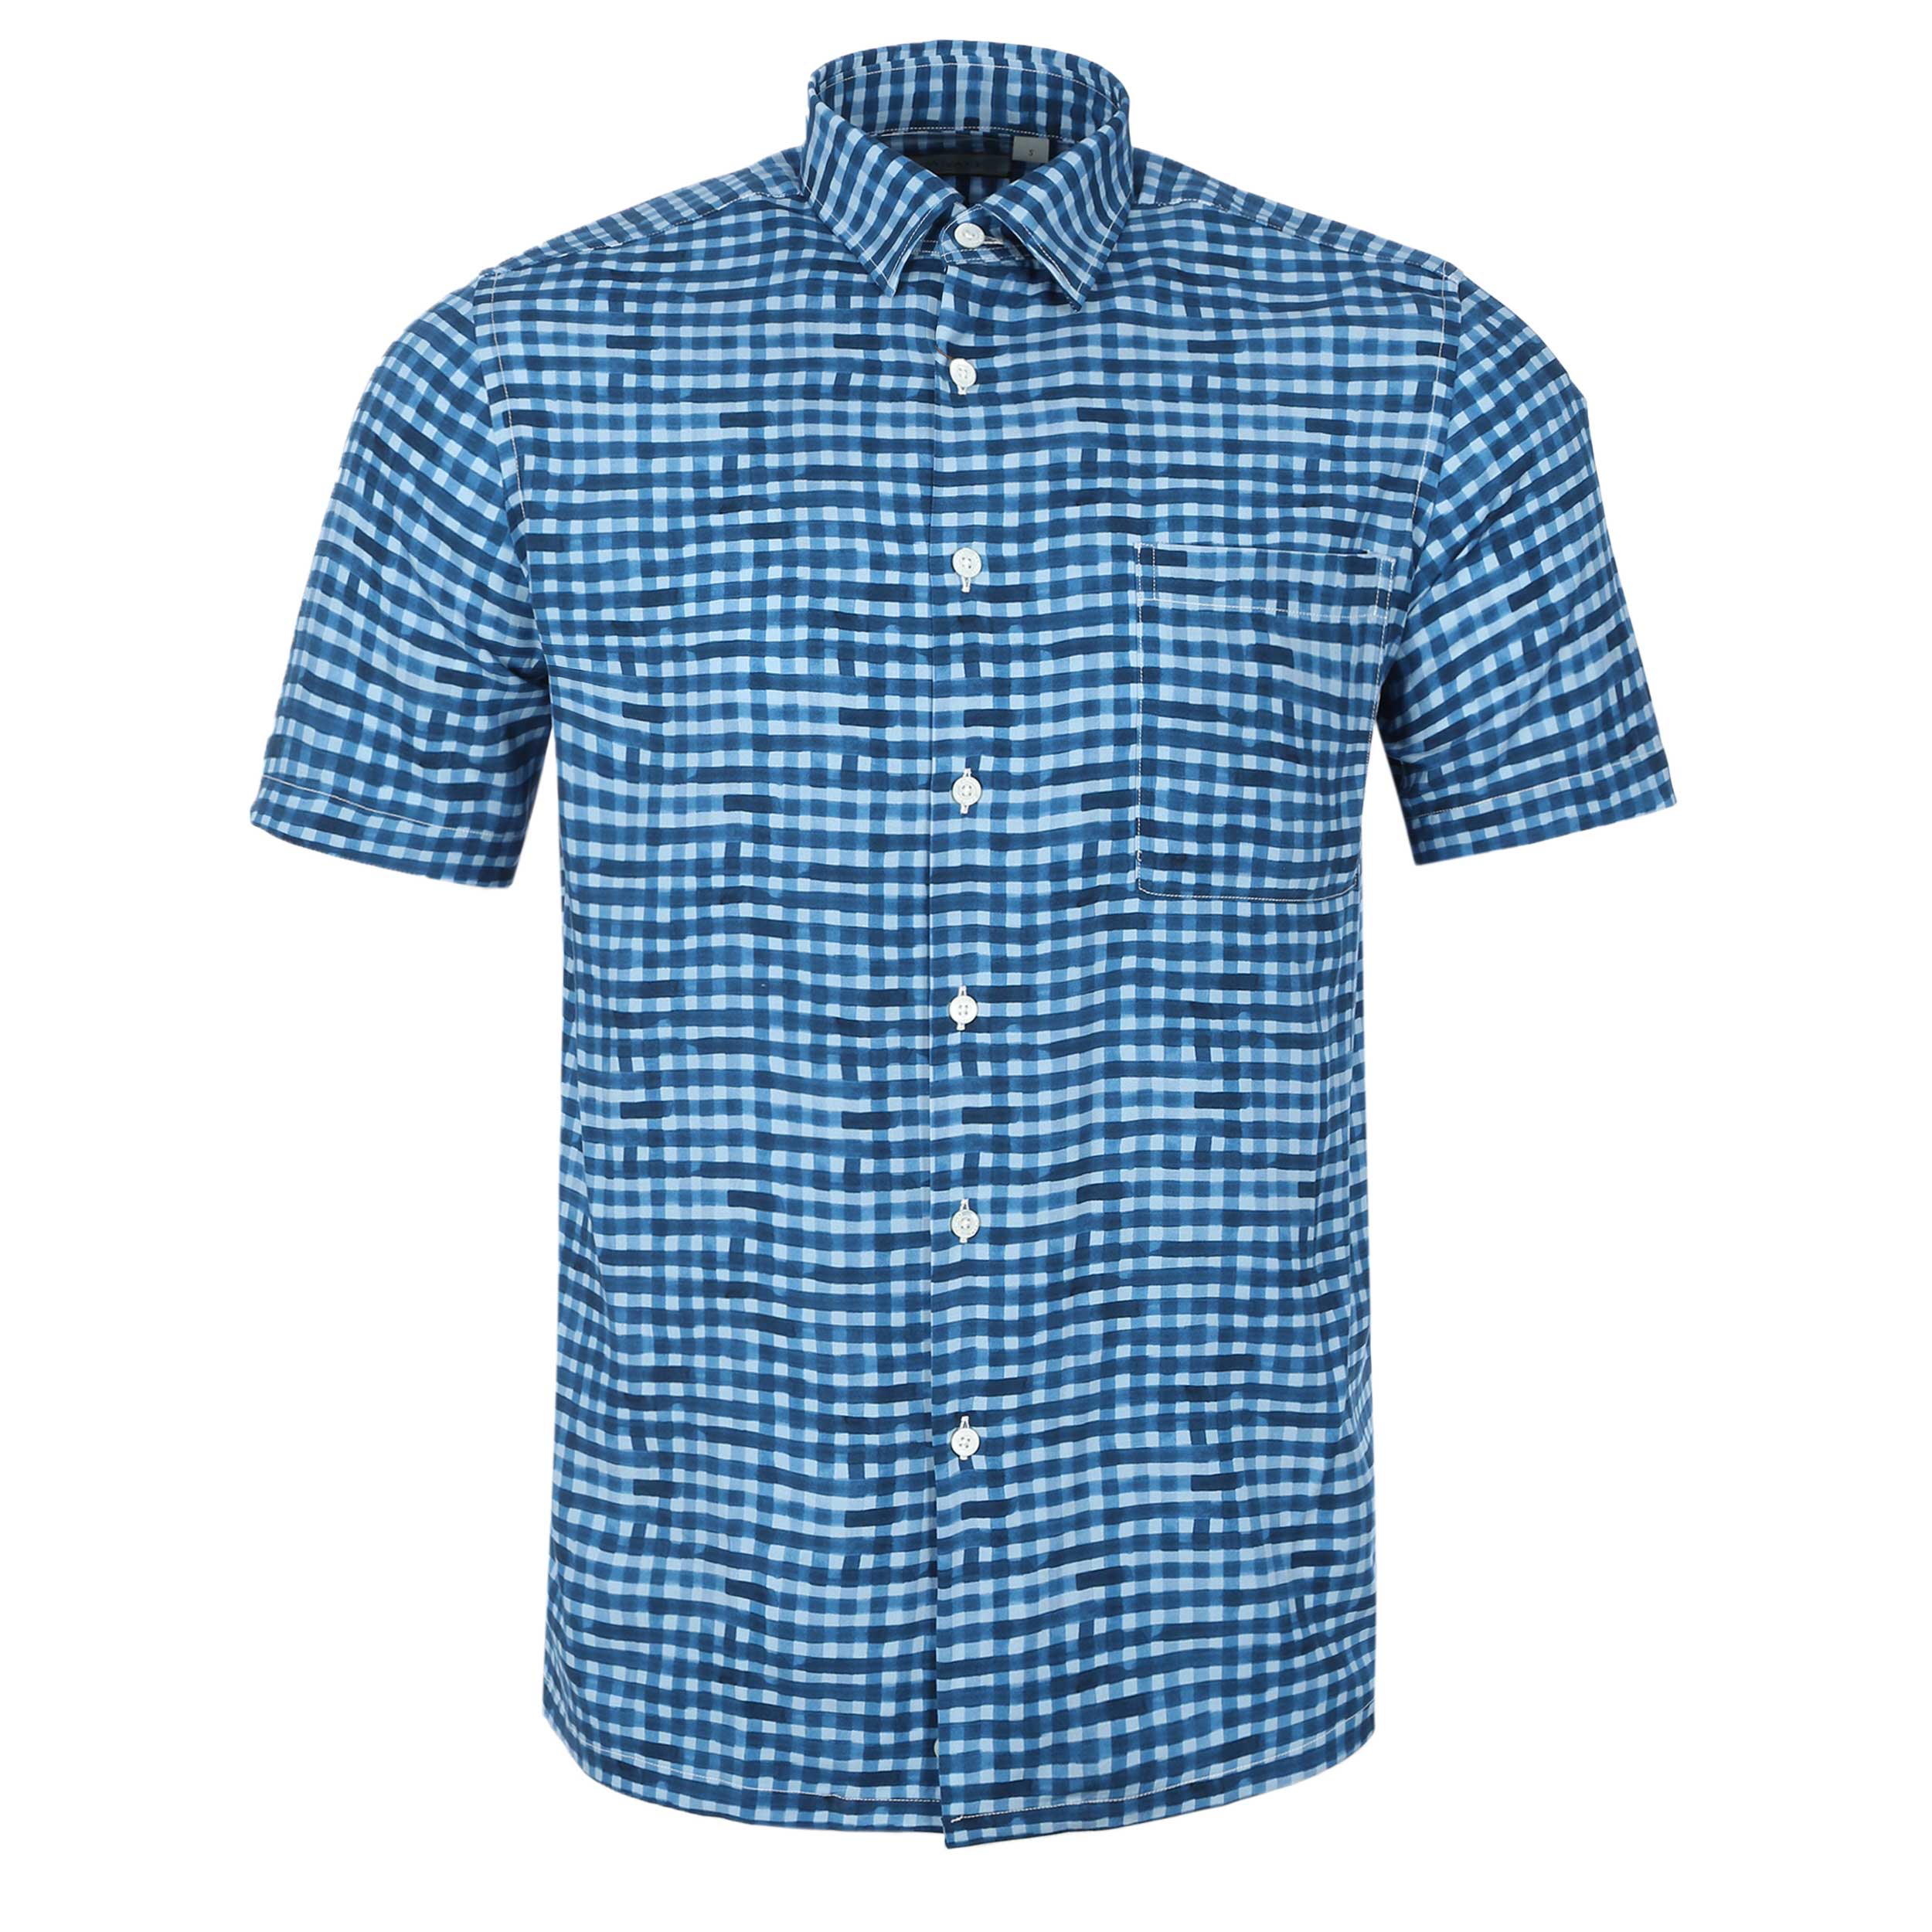 Canali Small Check Print SS Shirt in Blue Print